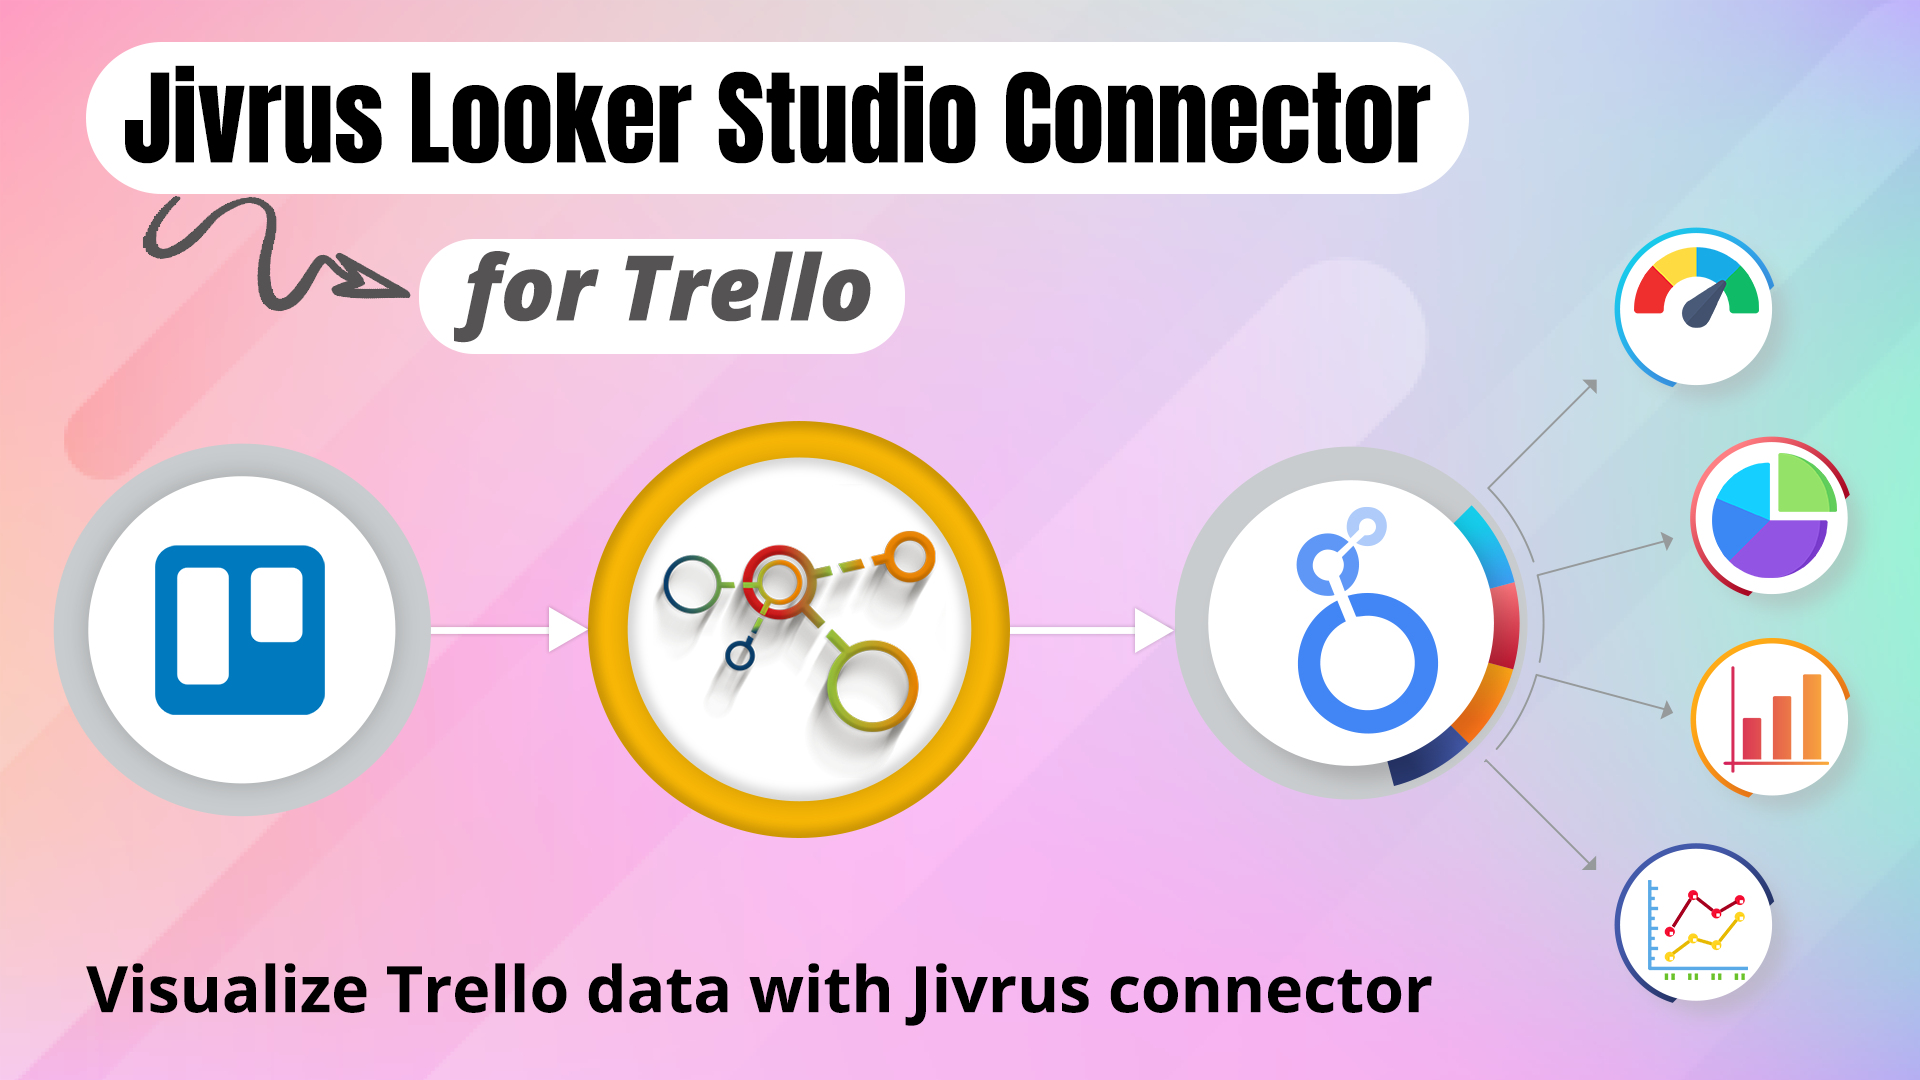 Jivrus Looker Studio Connector for Trello